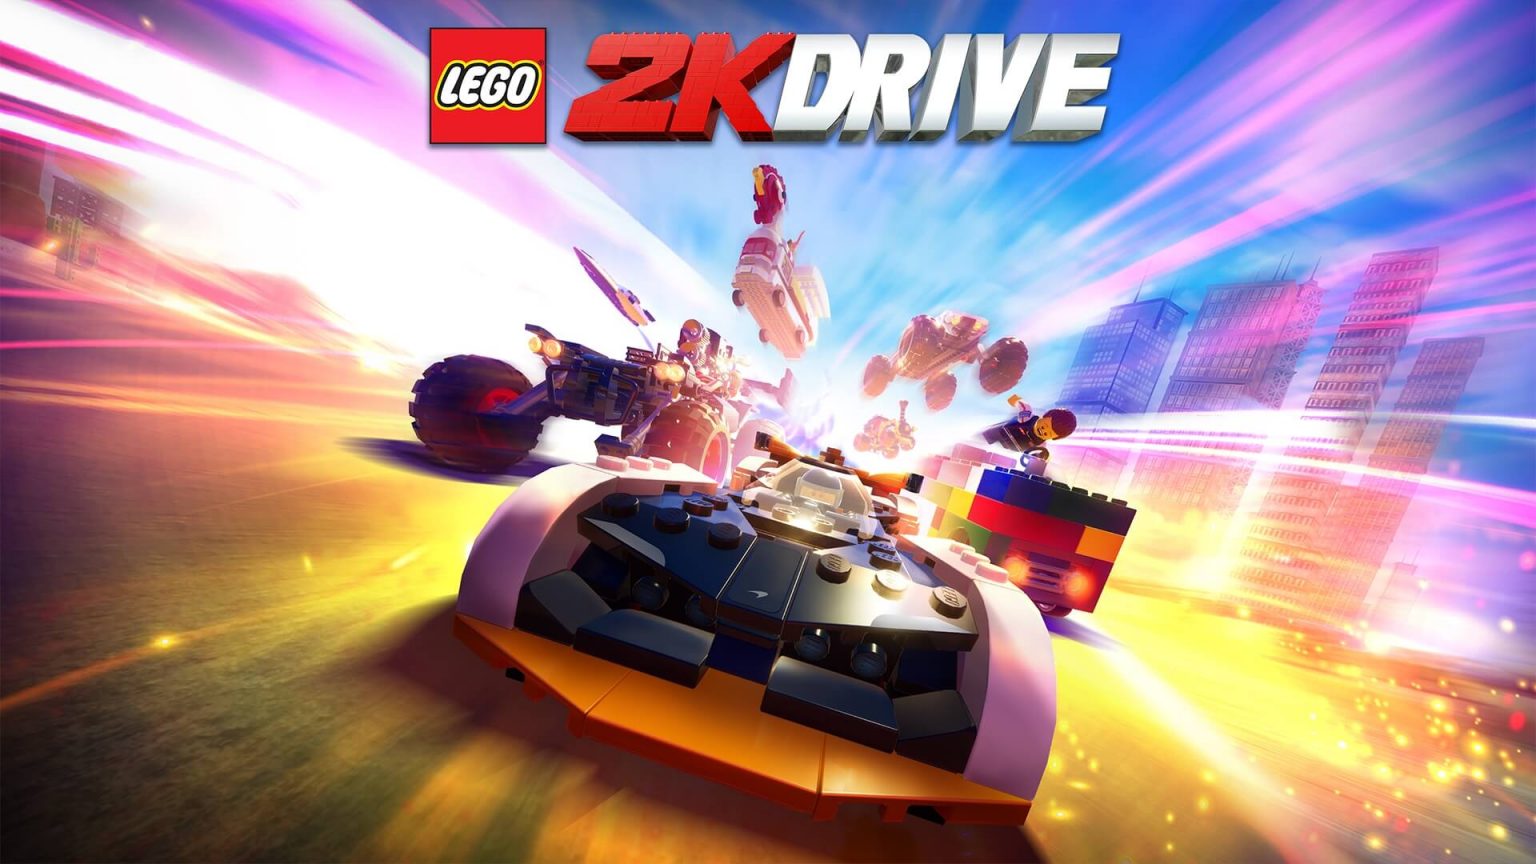 LEGO 2K Drive release date